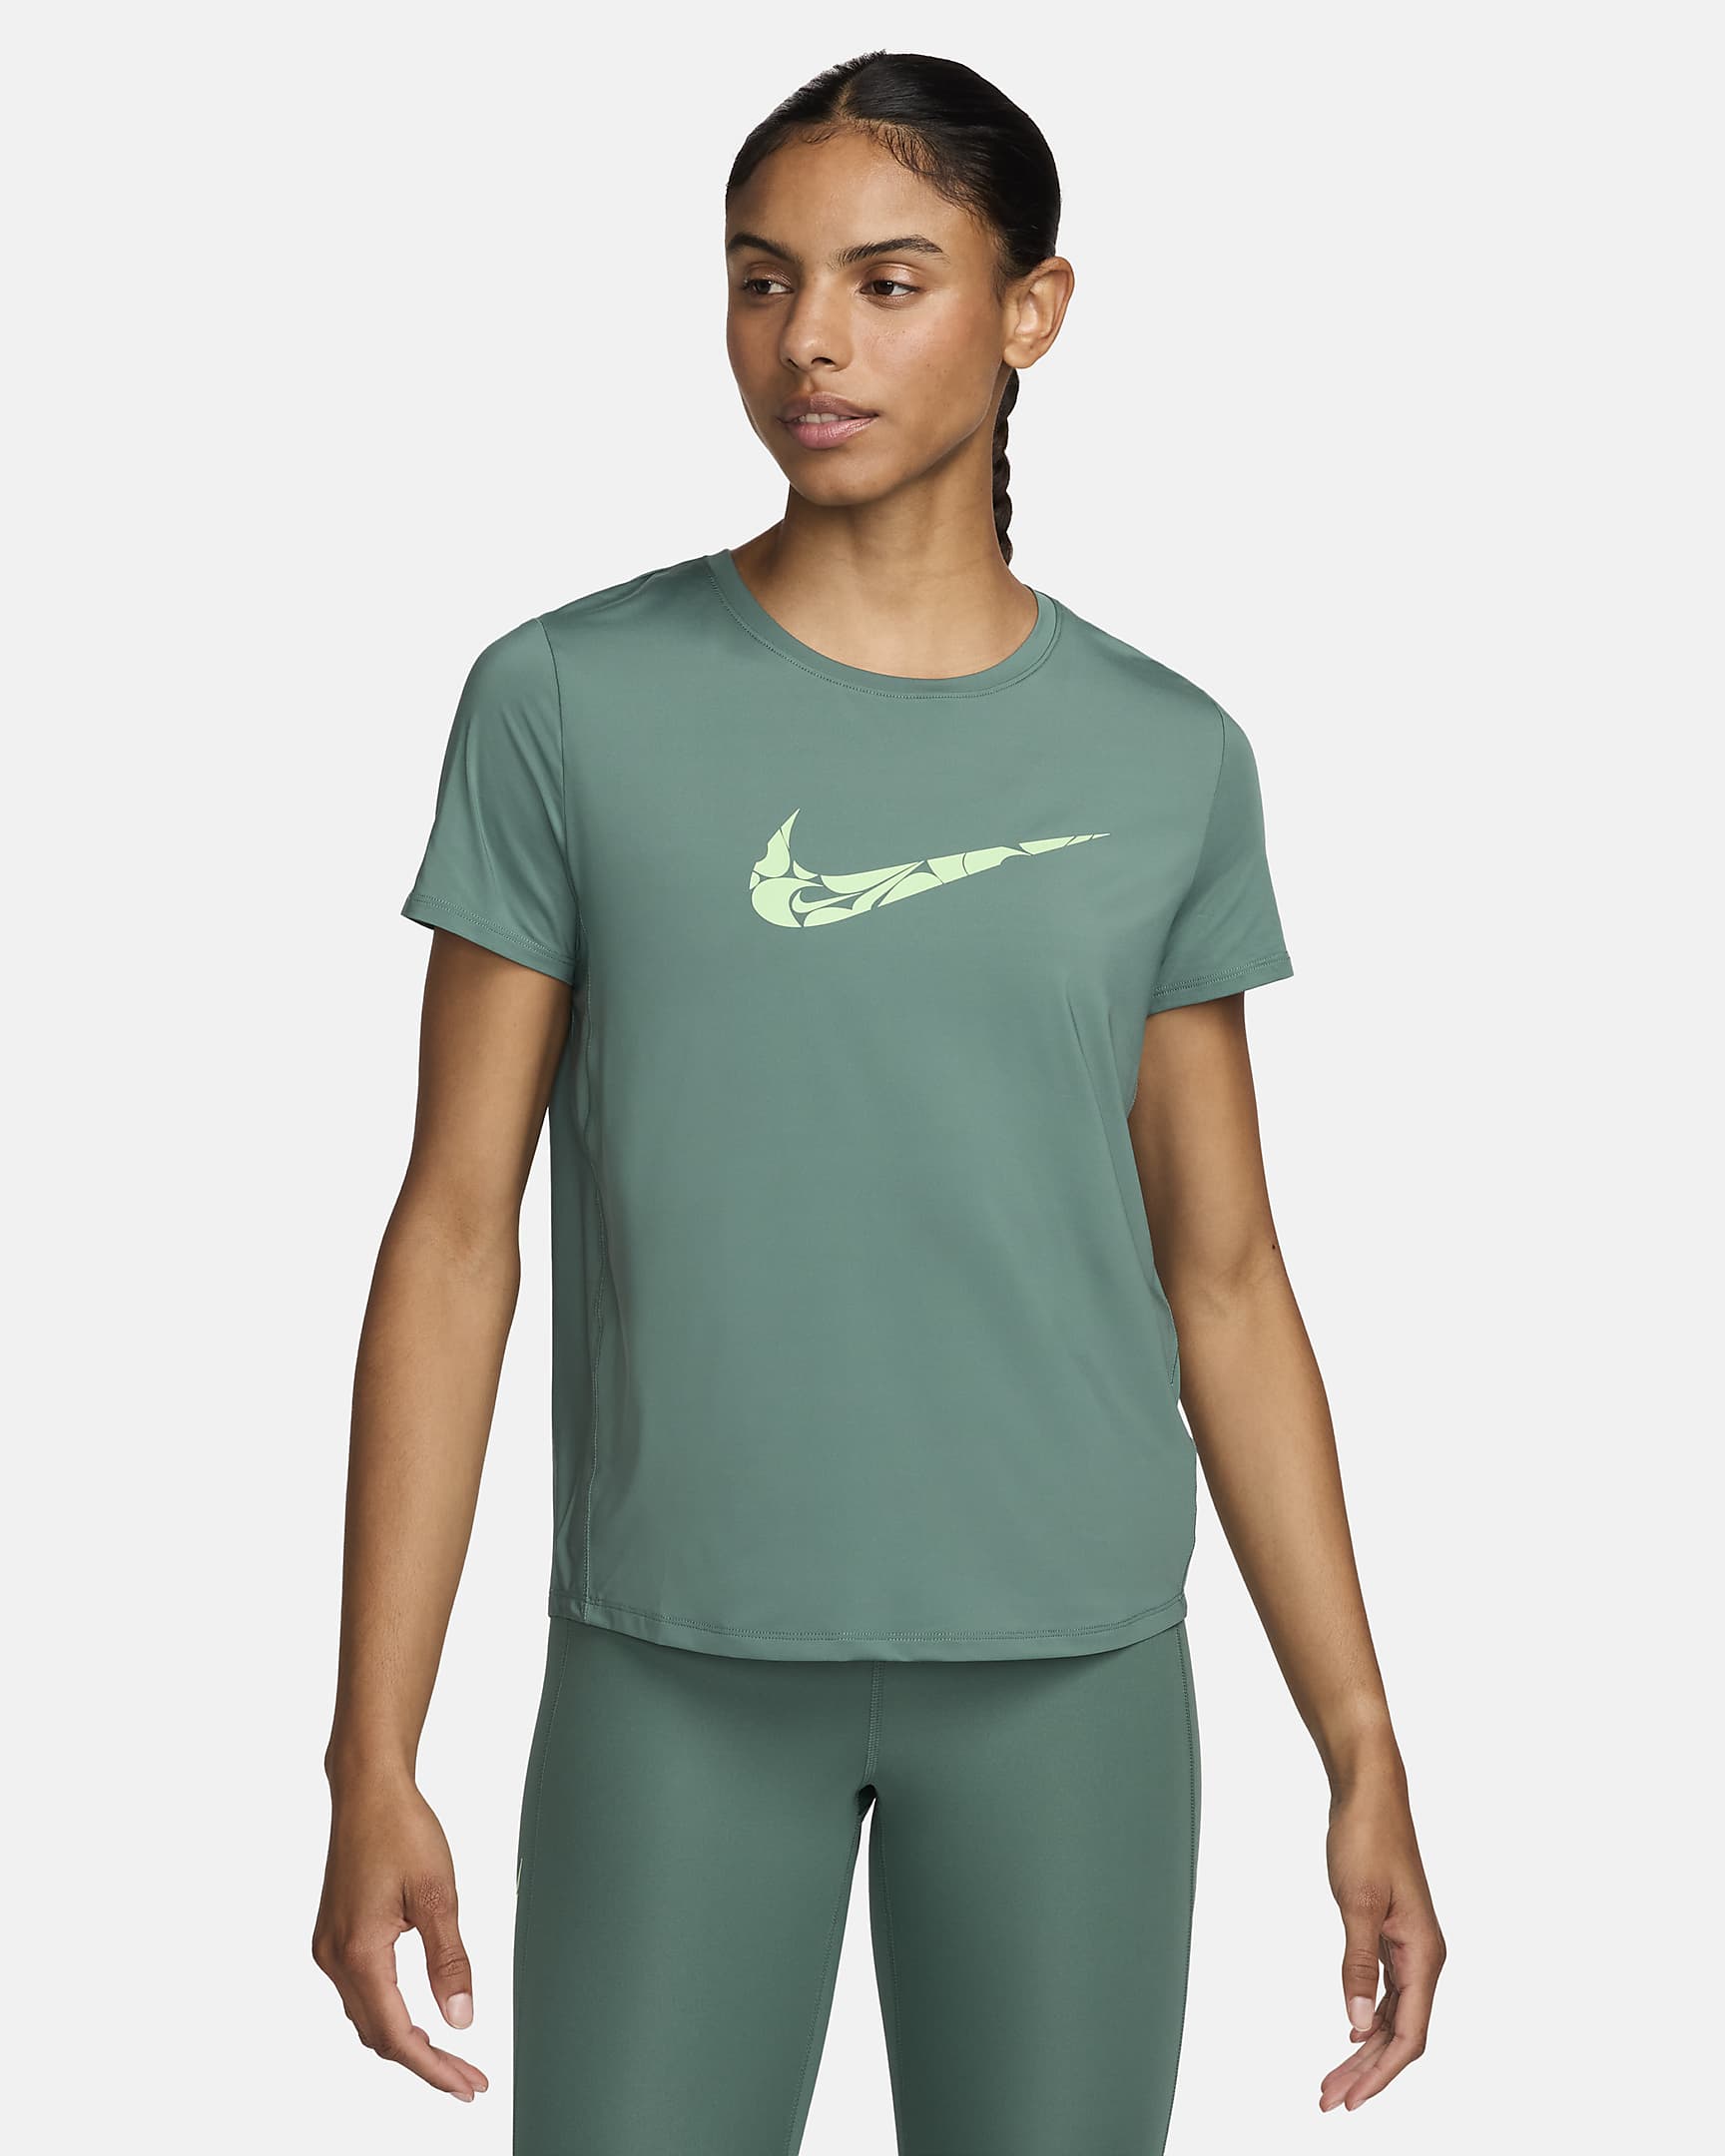 Nike One Swoosh Dri-FIT Kurzarm-Laufoberteil für Damen - Bicoastal/Vapor Green